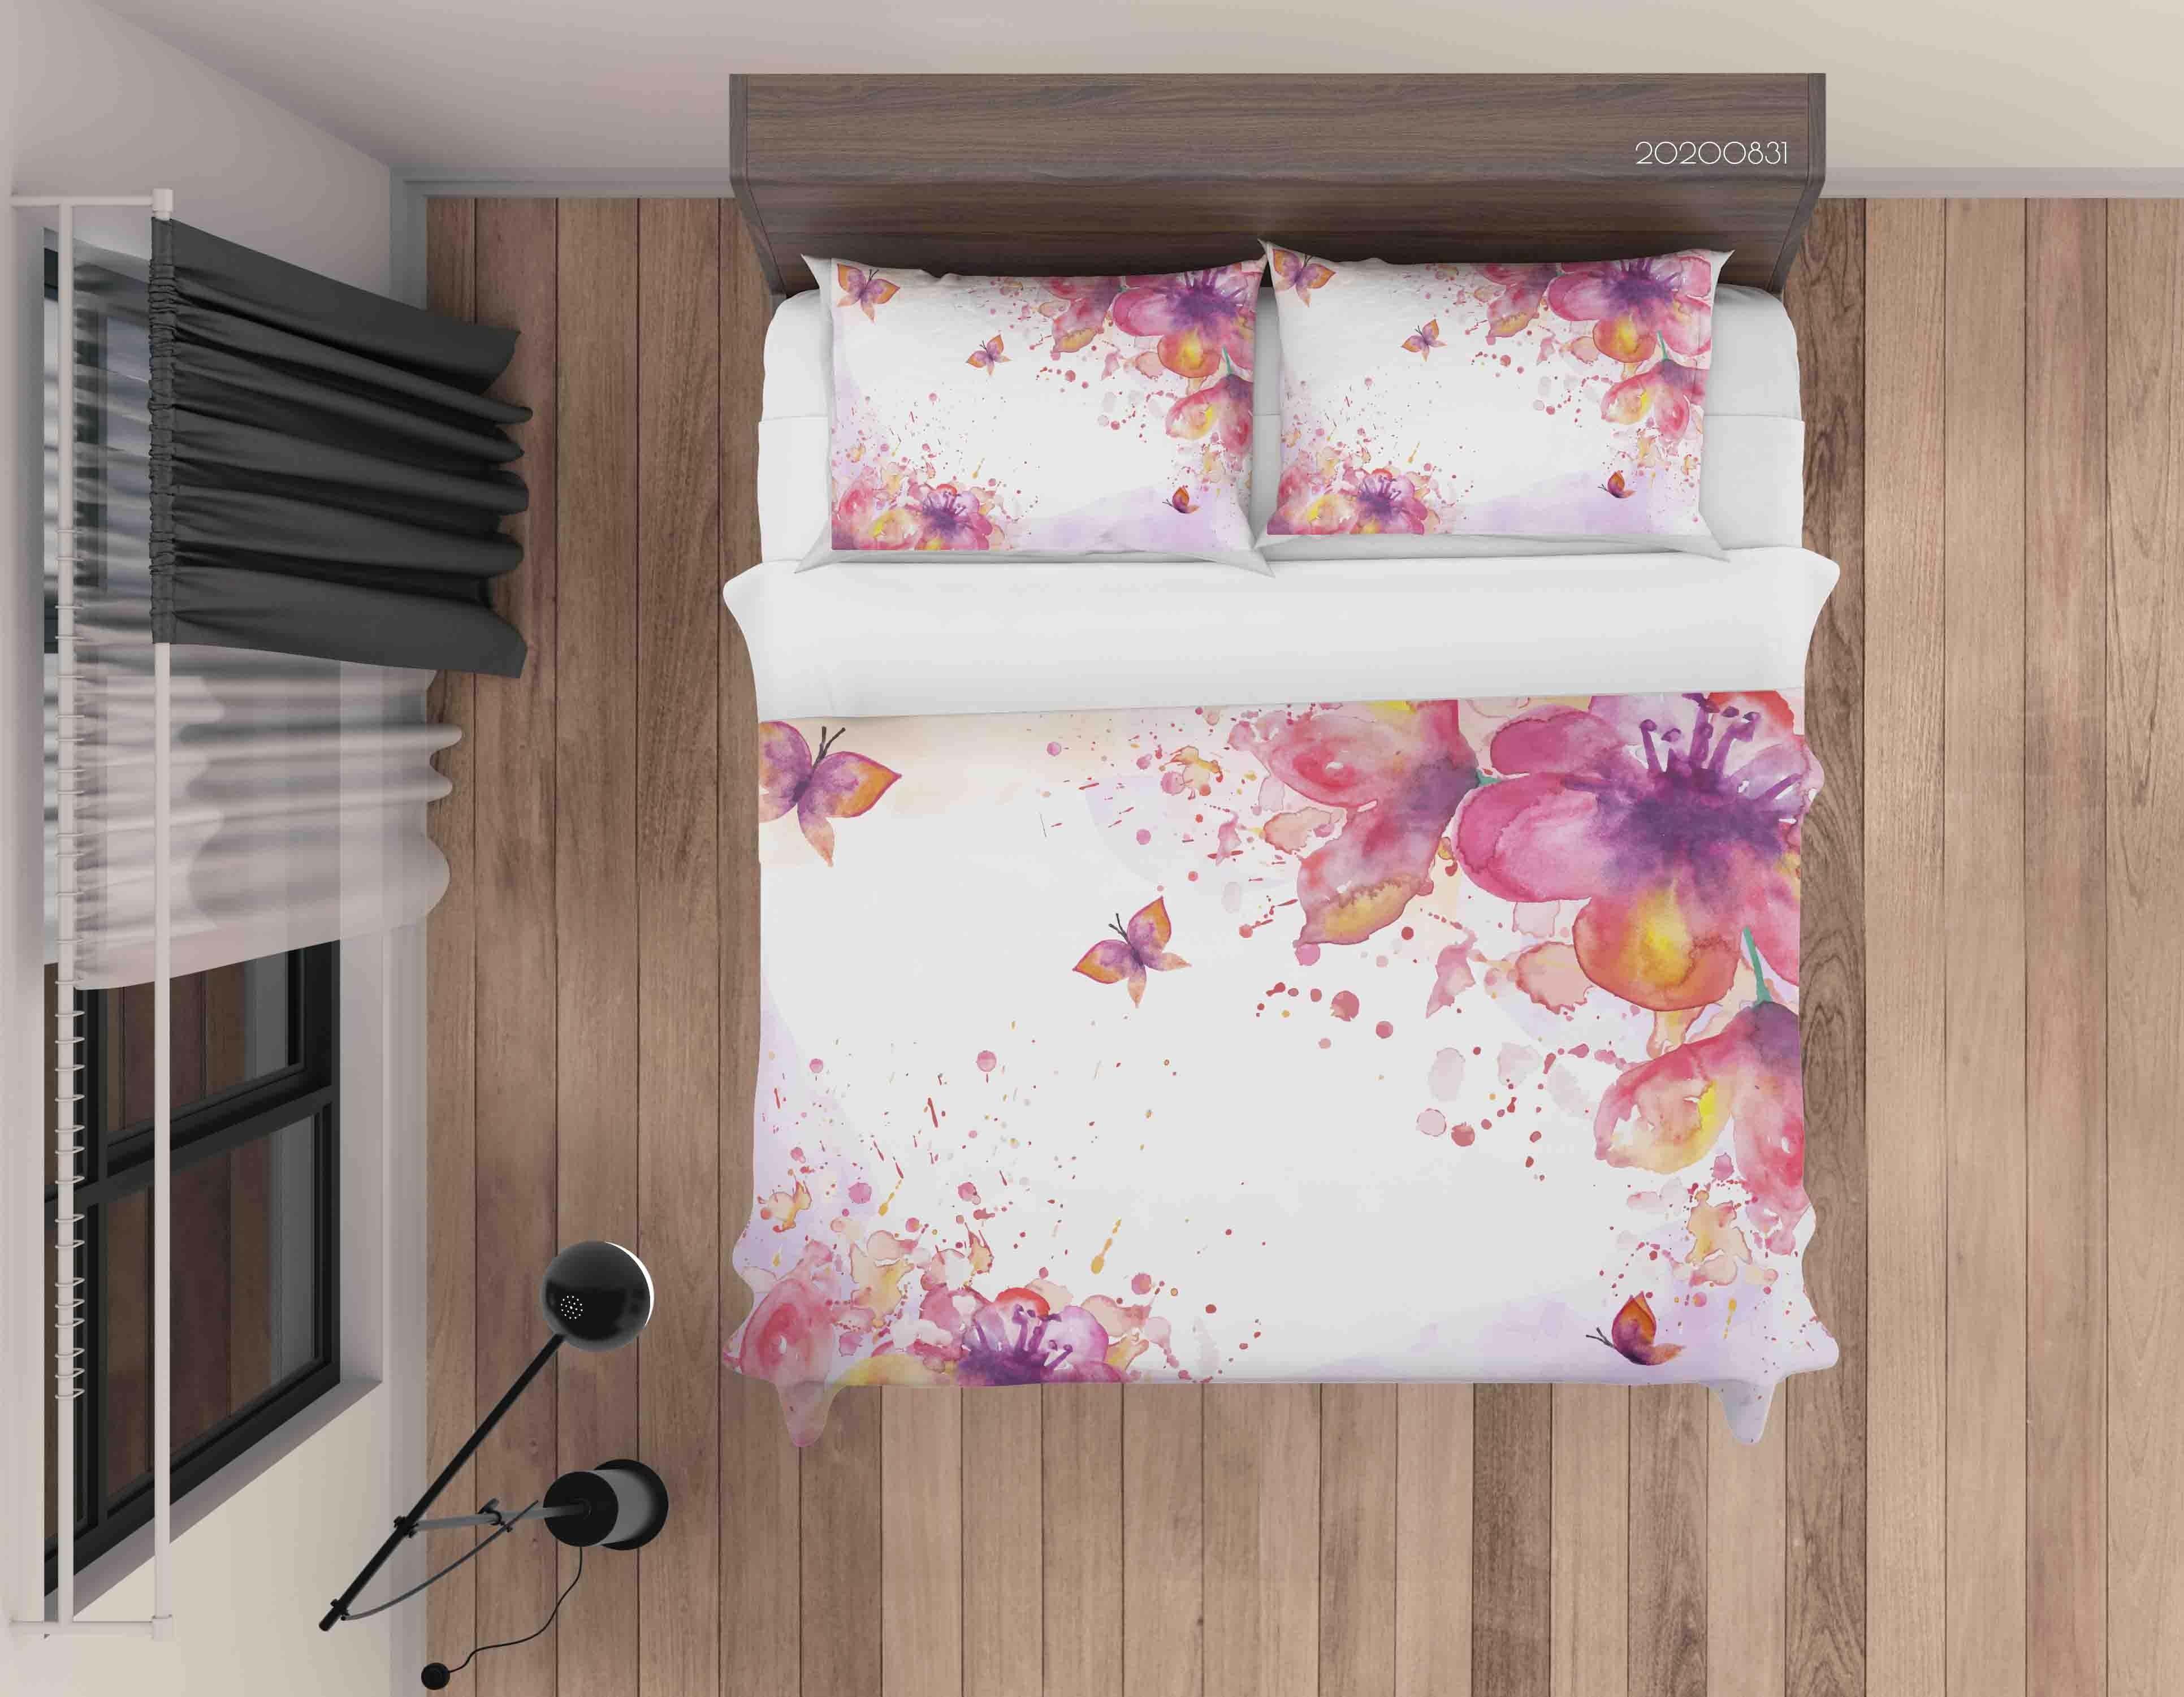 3D Watercolor Floral Butterfly Pattern Quilt Cover Set Bedding Set Duvet Cover Pillowcases WJ 3495- Jess Art Decoration